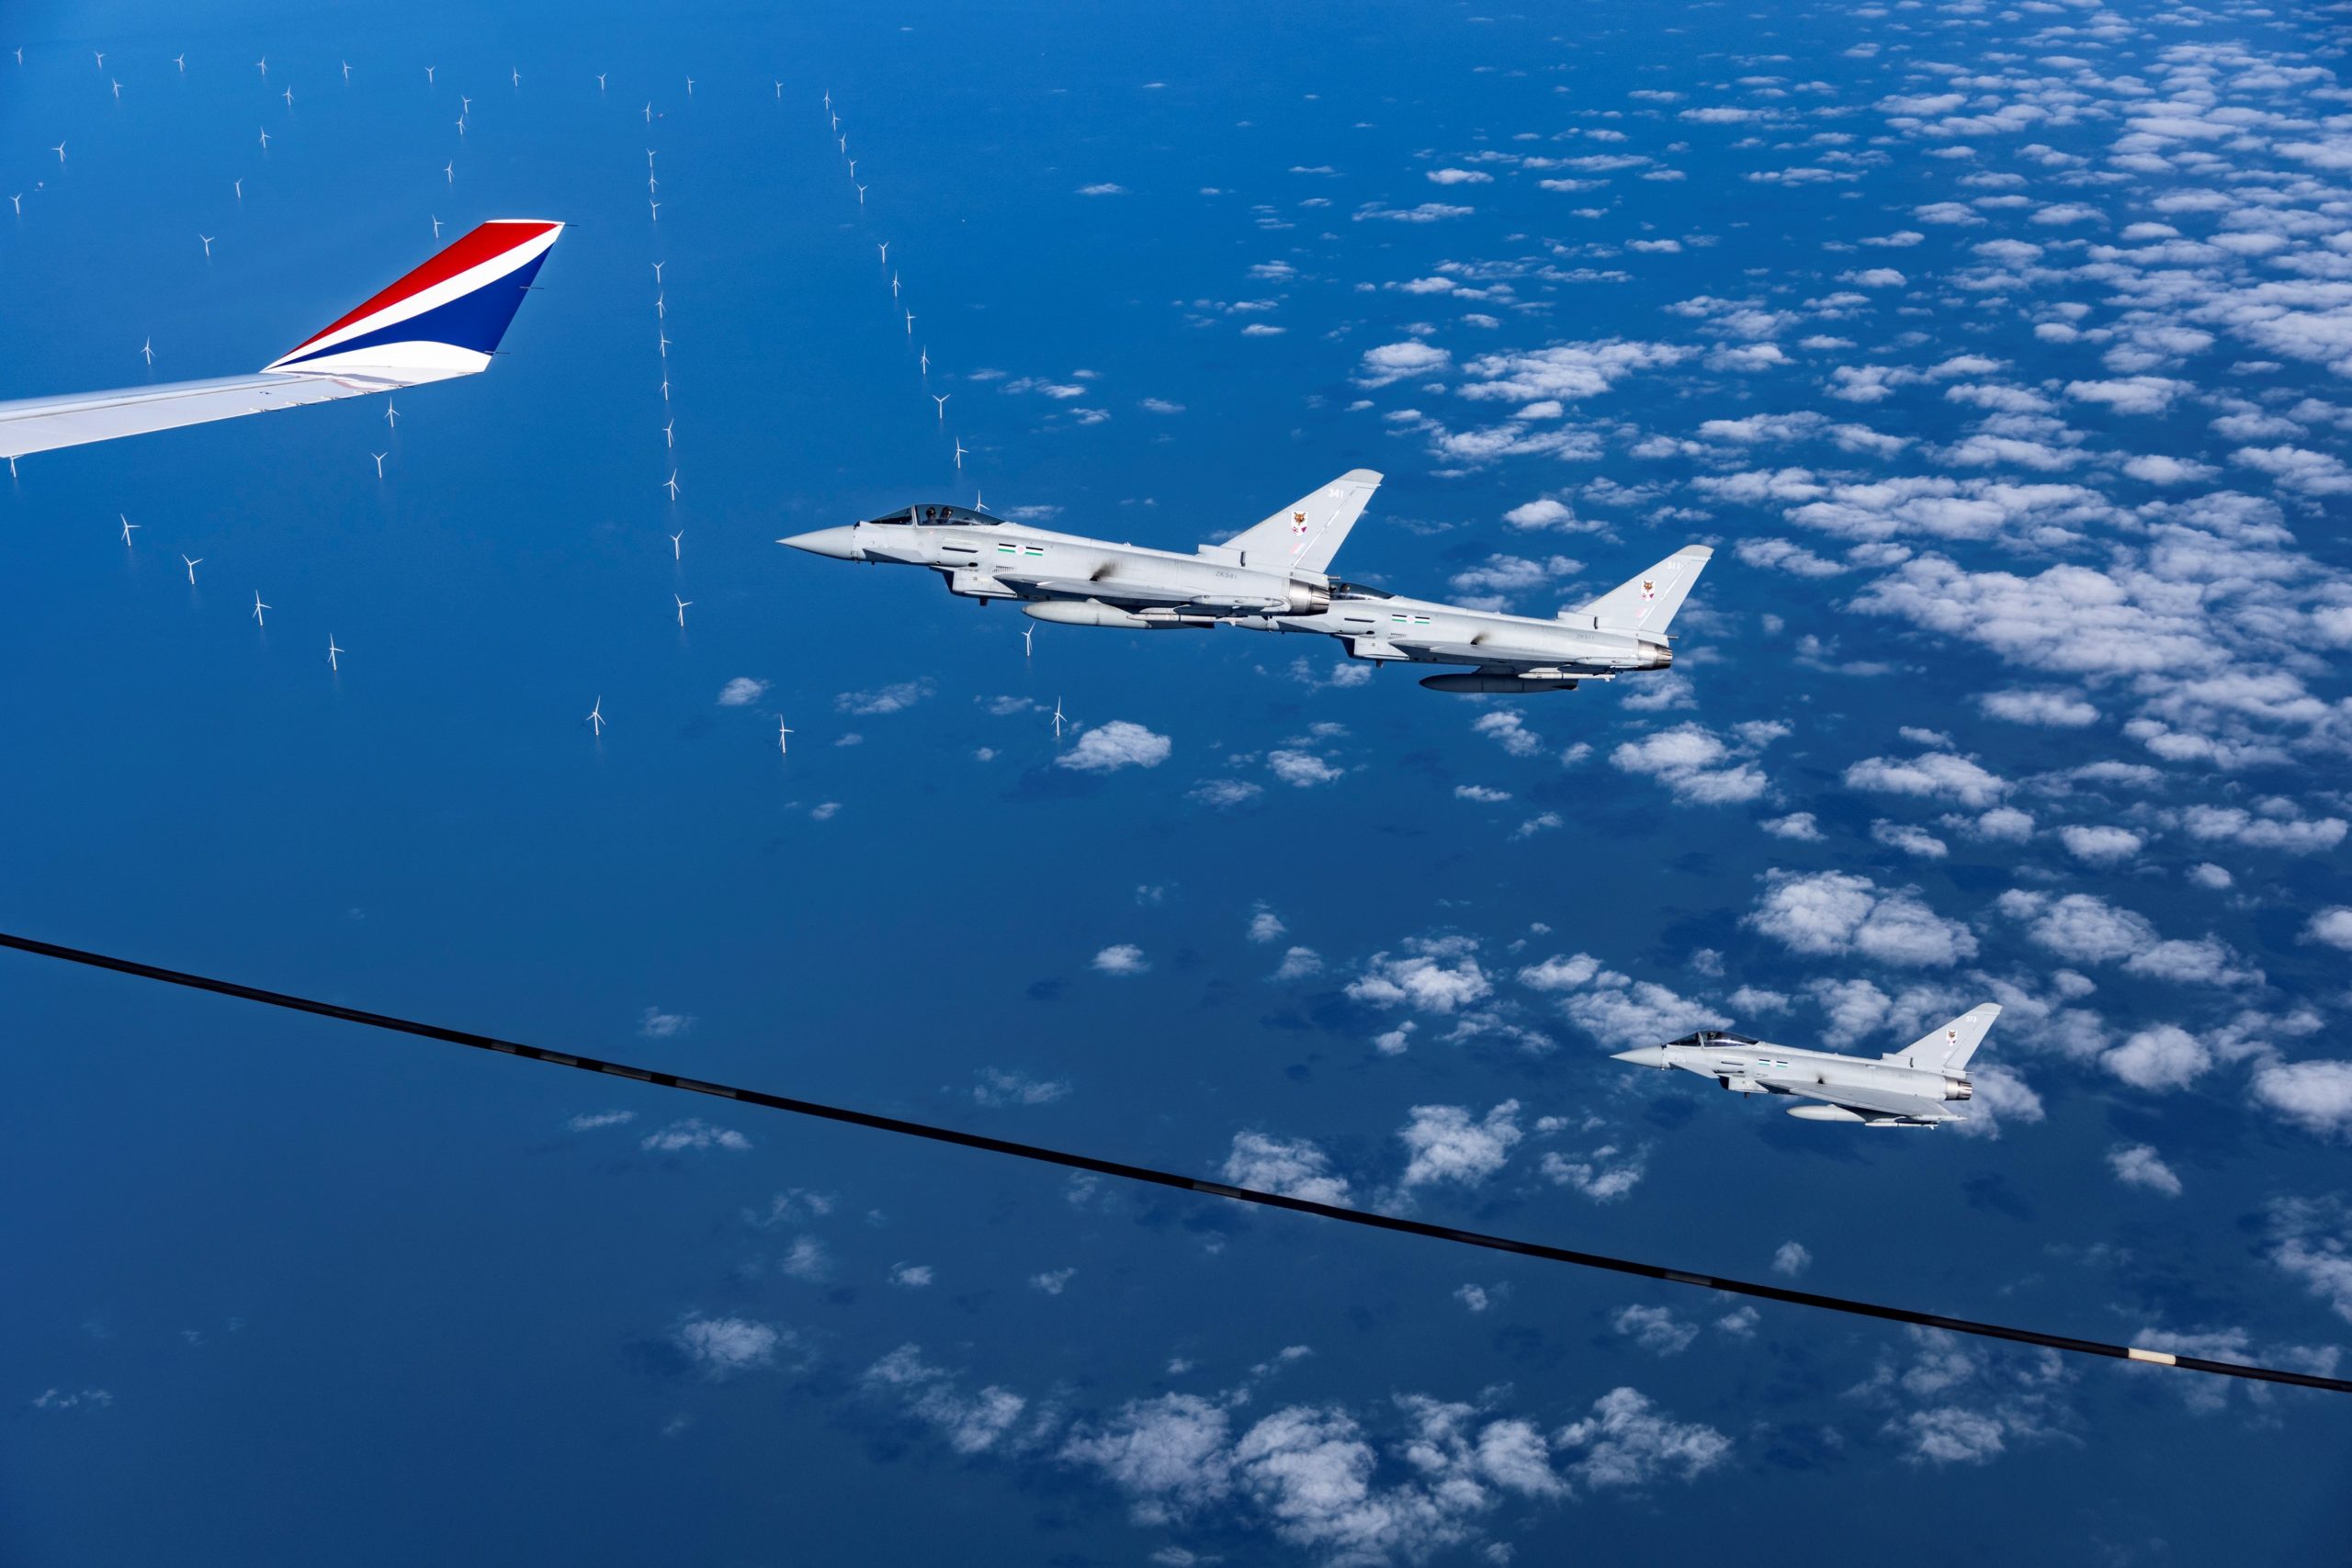 RAF testa voo movido a combustível sintético